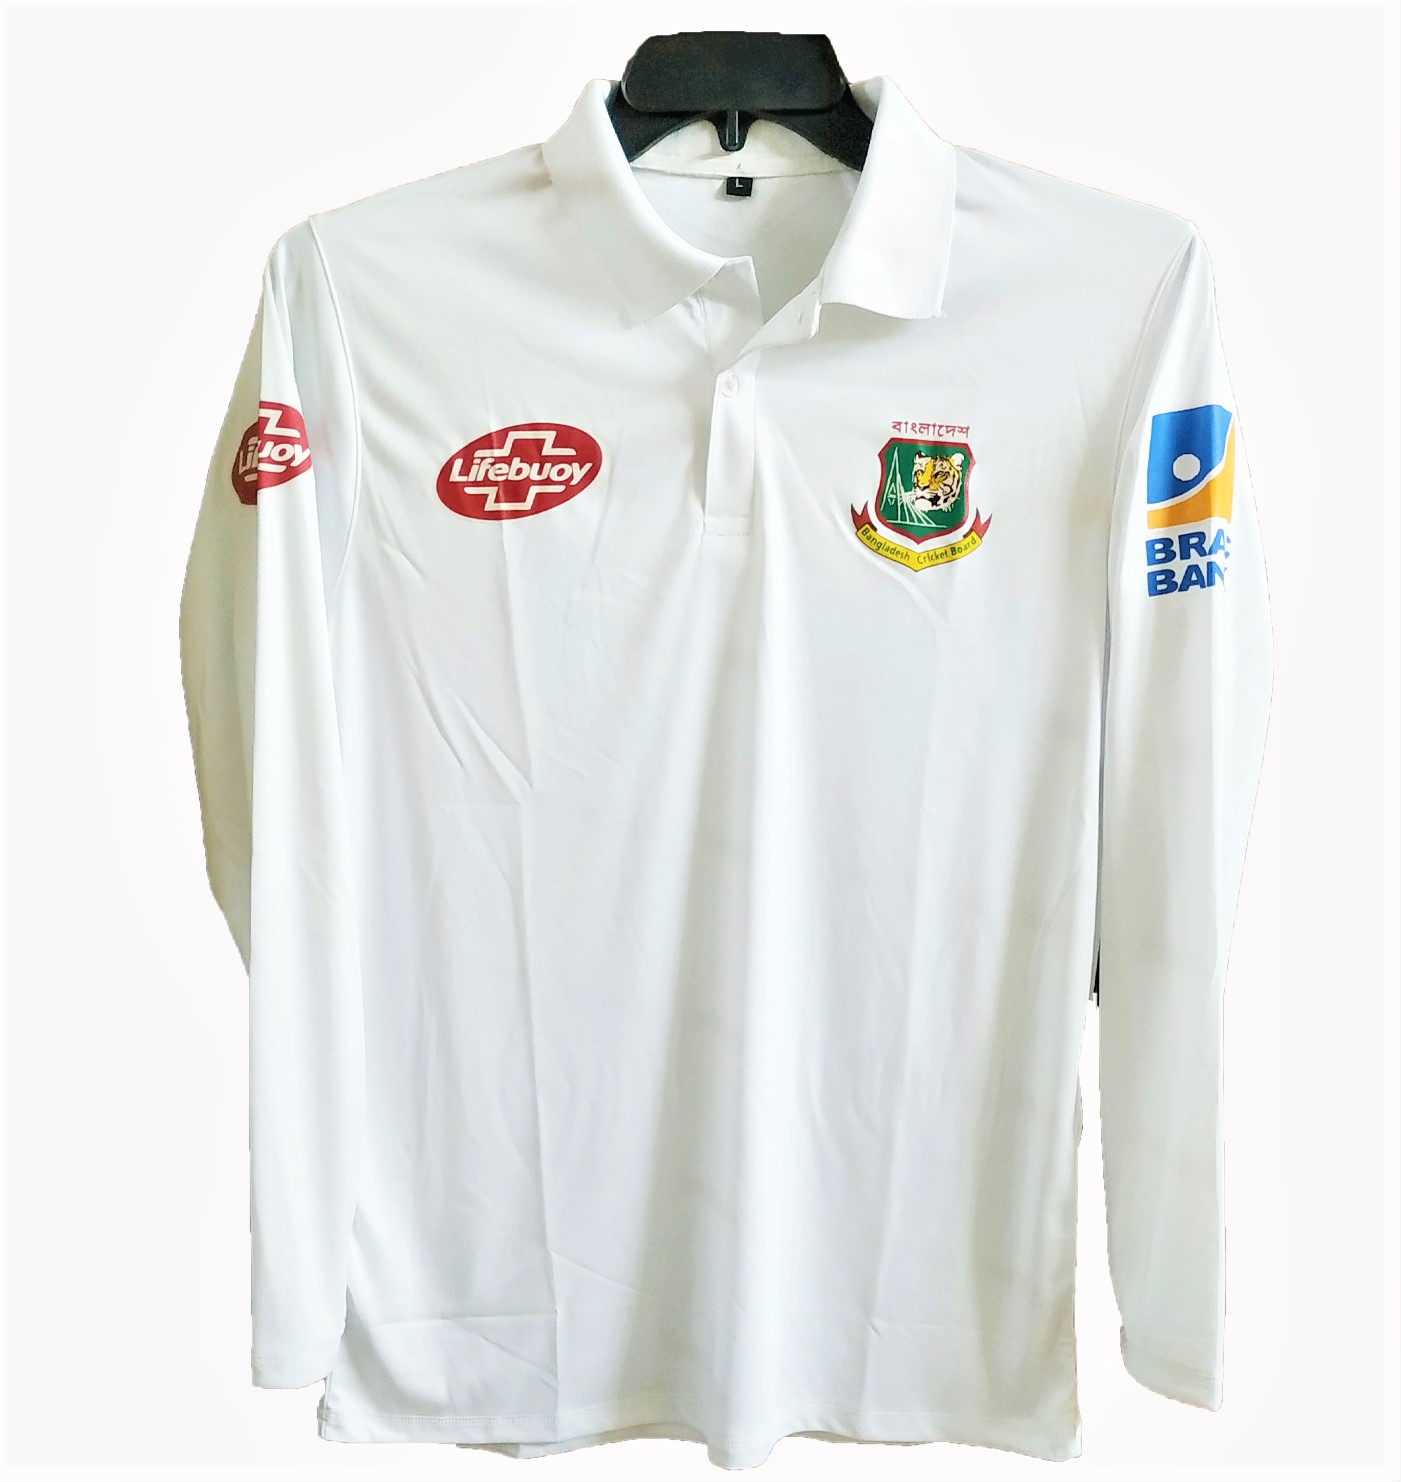 bangladesh cricket jersey online